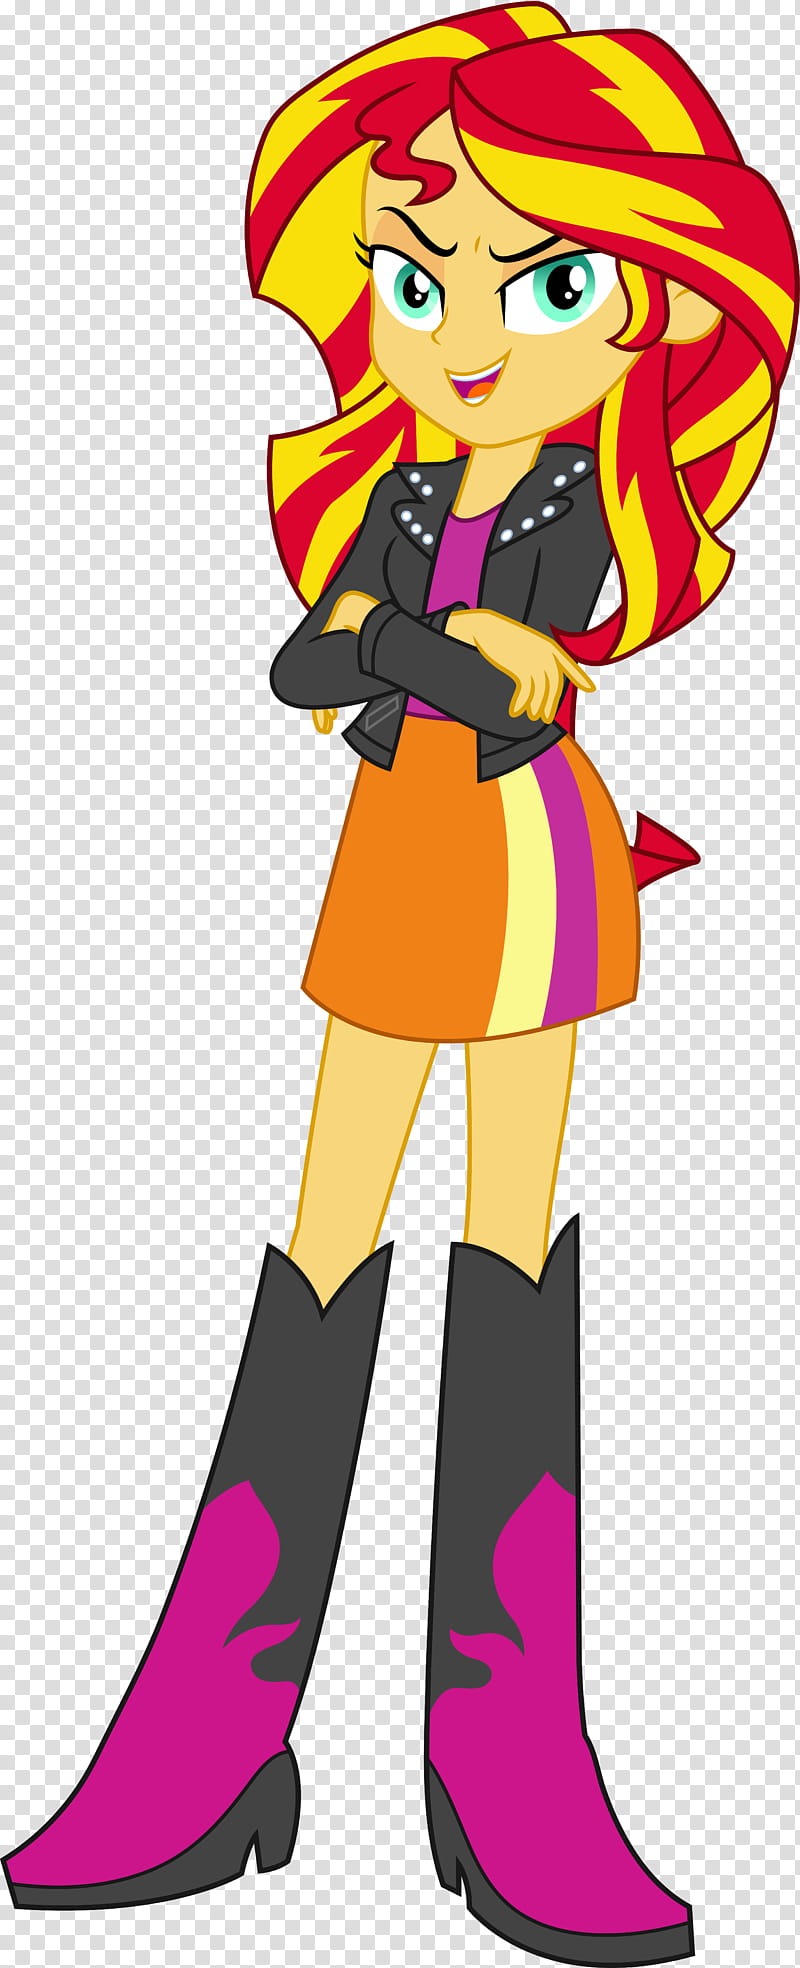 Equestria Girls Sunset Shimmer, female character illustration transparent background PNG clipart